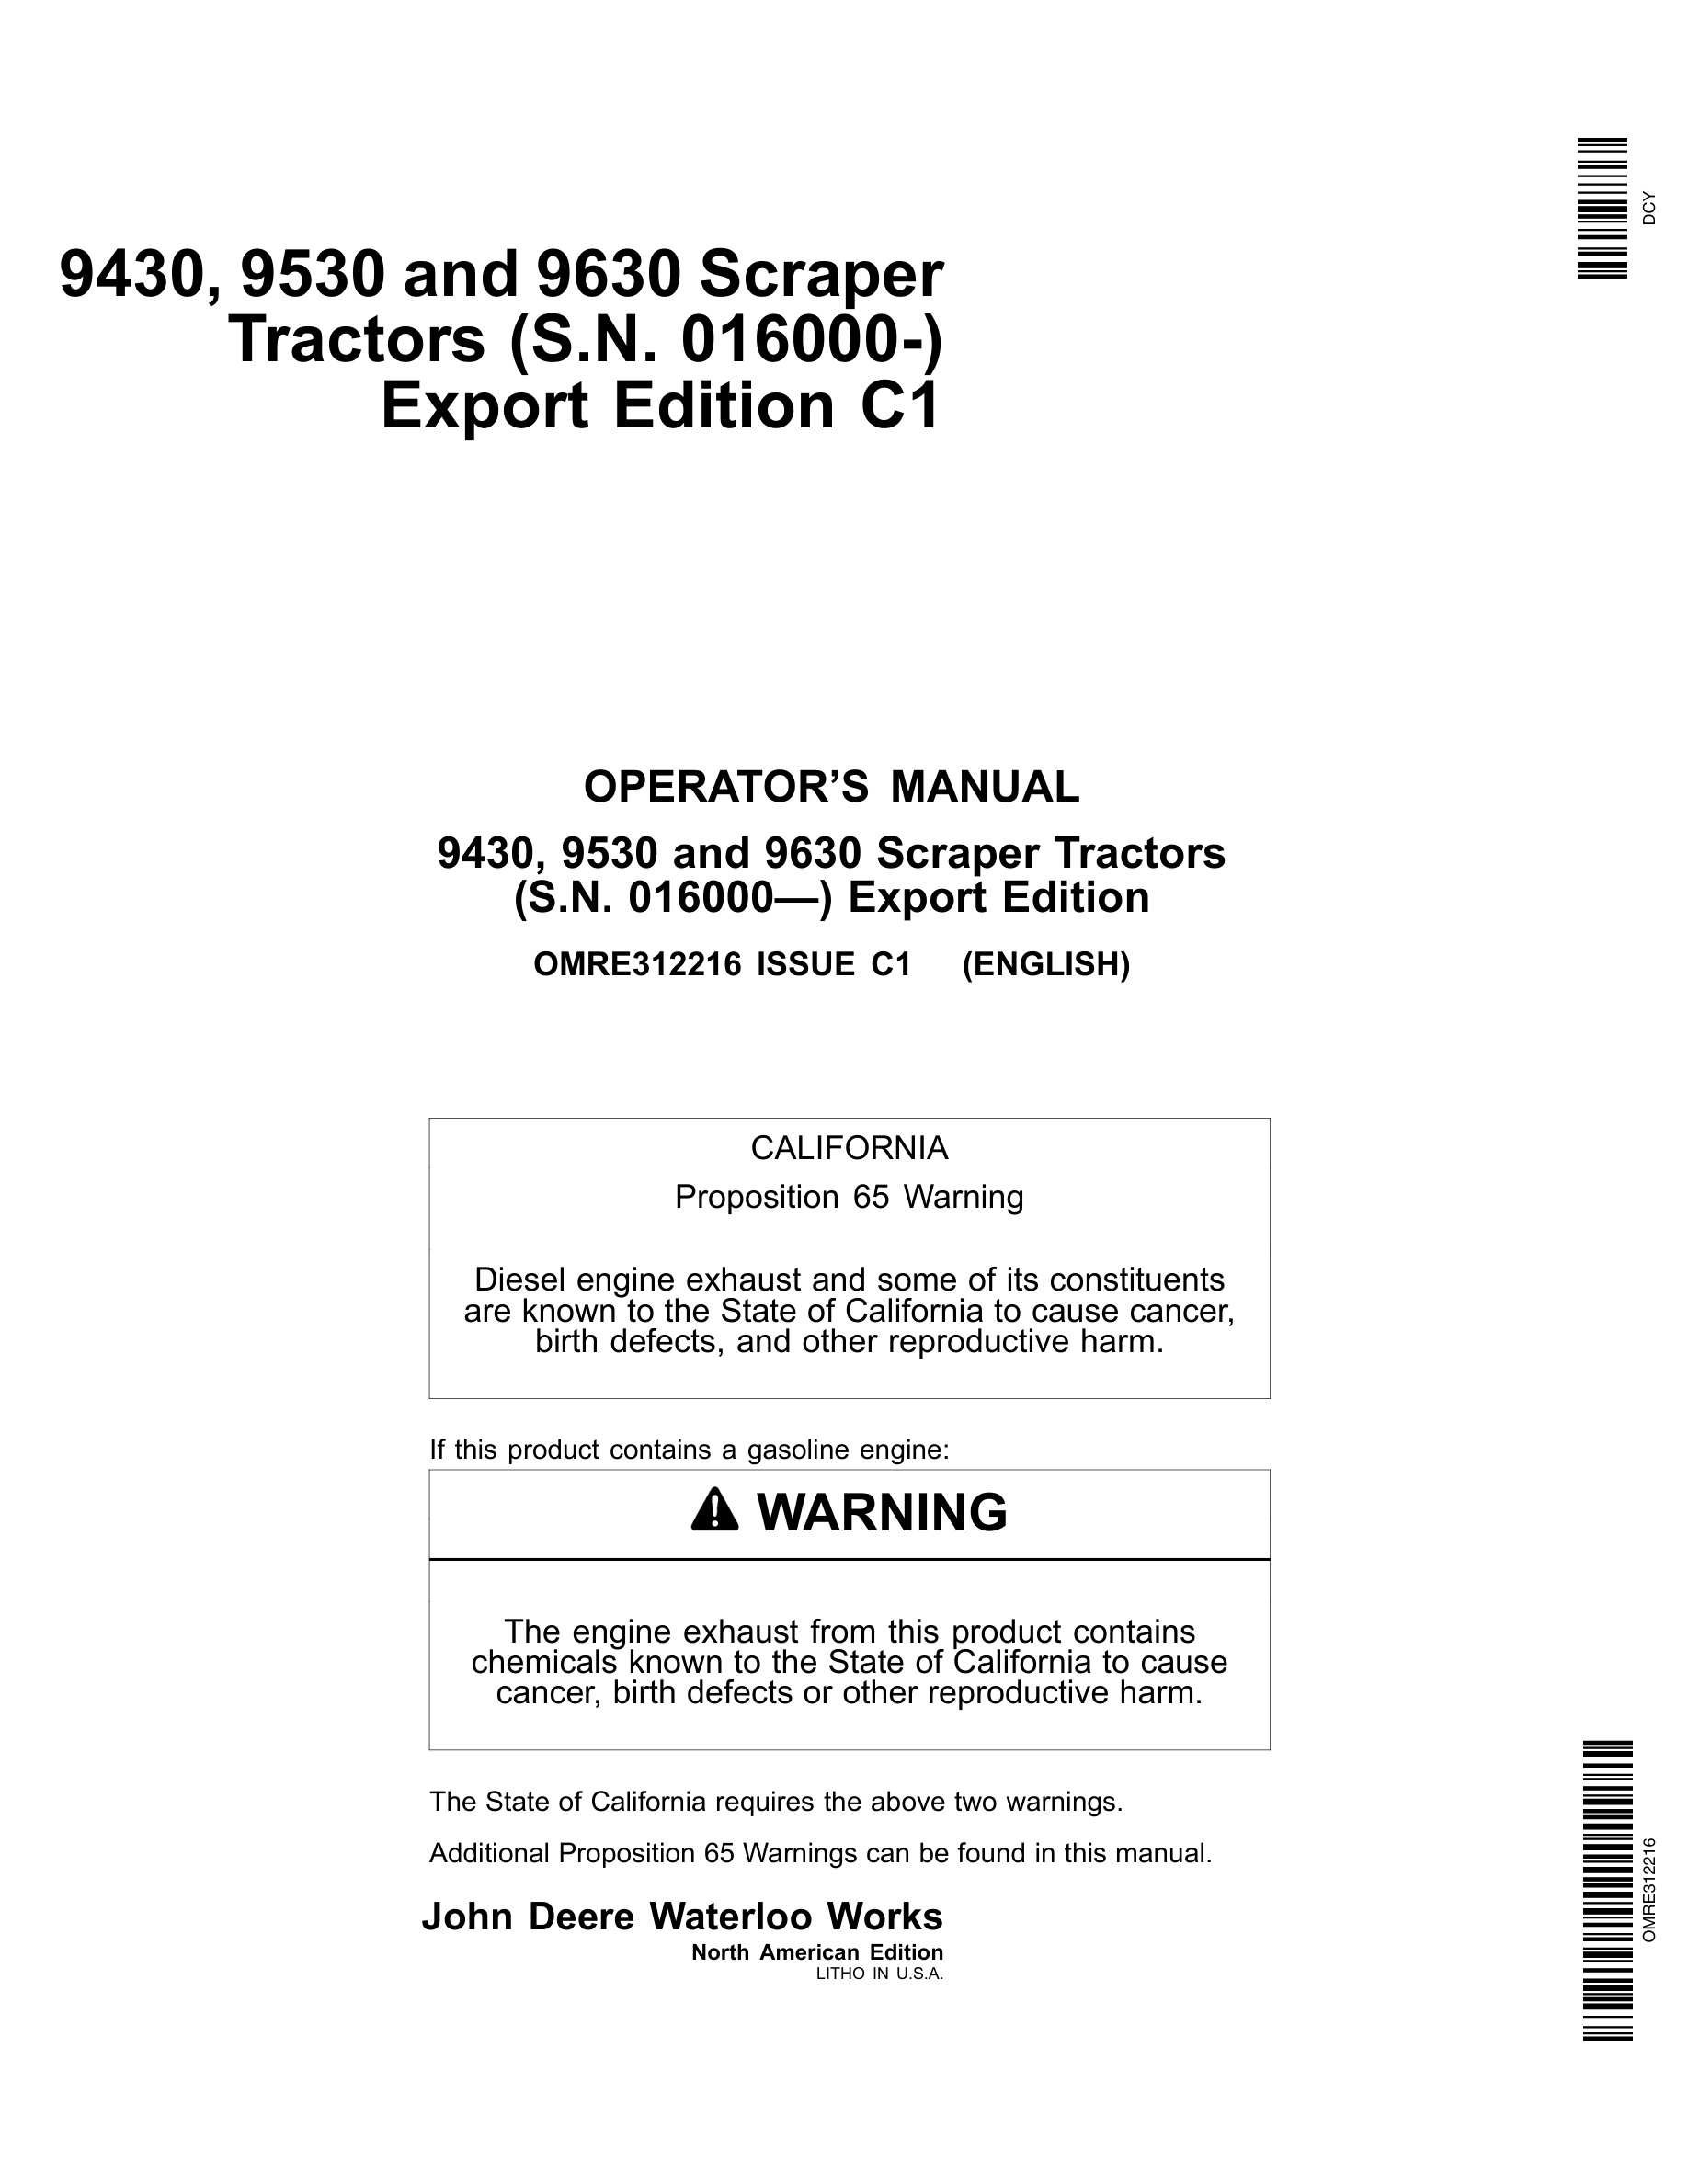 John Deere 9430, 9530 And 9630 Scraper Tractors Operator Manuals OMRE312216-1